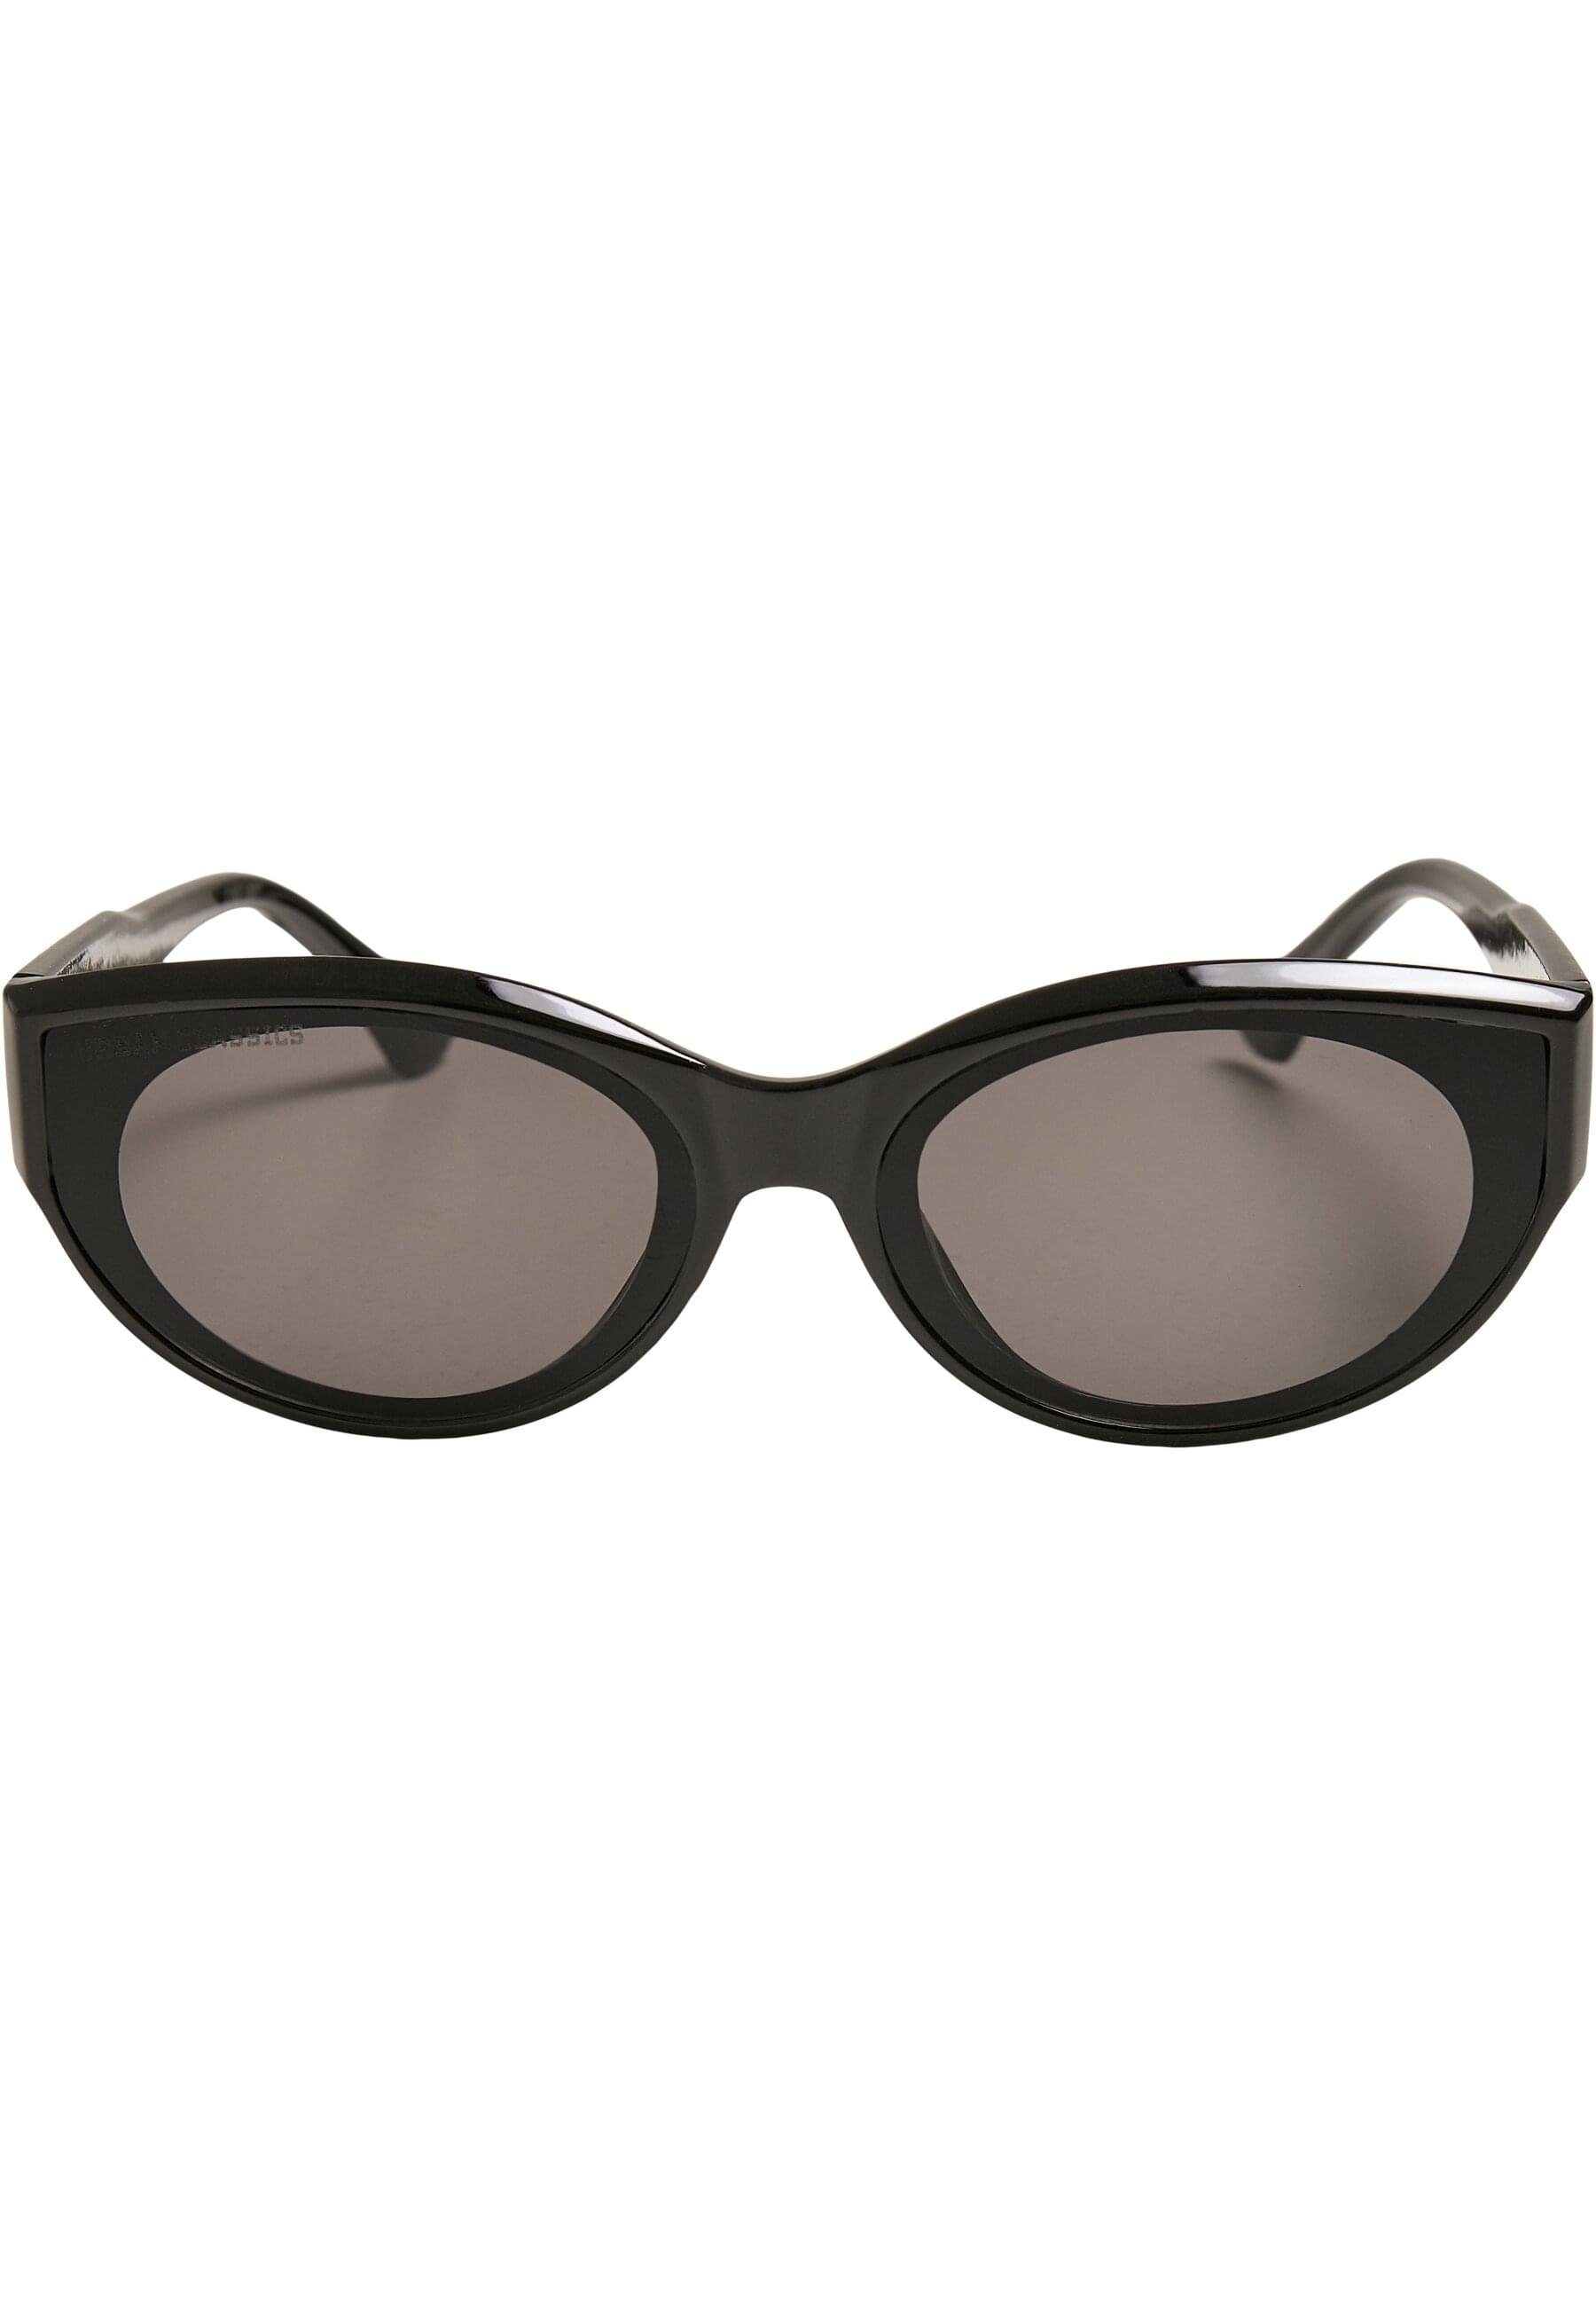 Sunglasses San URBAN Fransisco Sonnenbrille CLASSICS Unisex